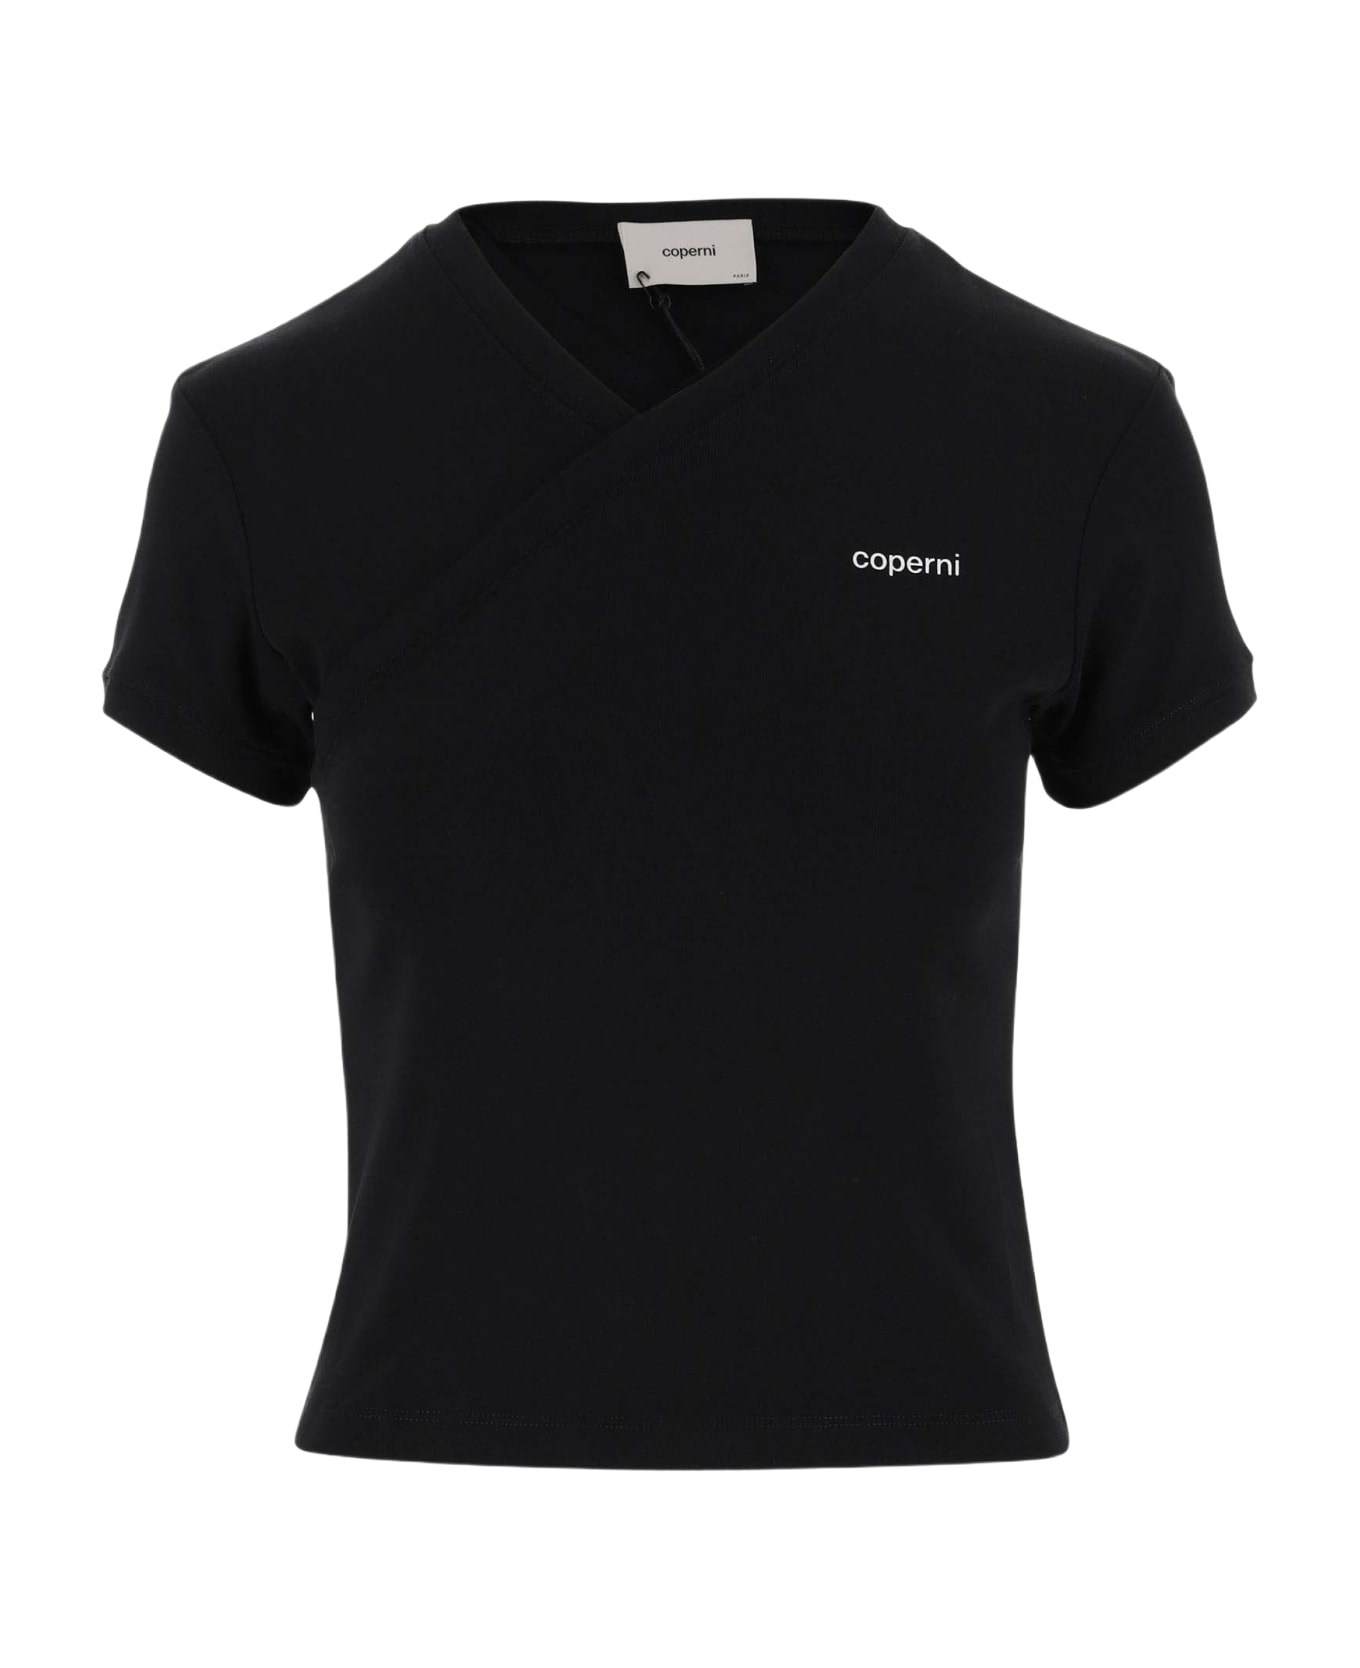 Coperni Cotton T-shirt With Logo - Black